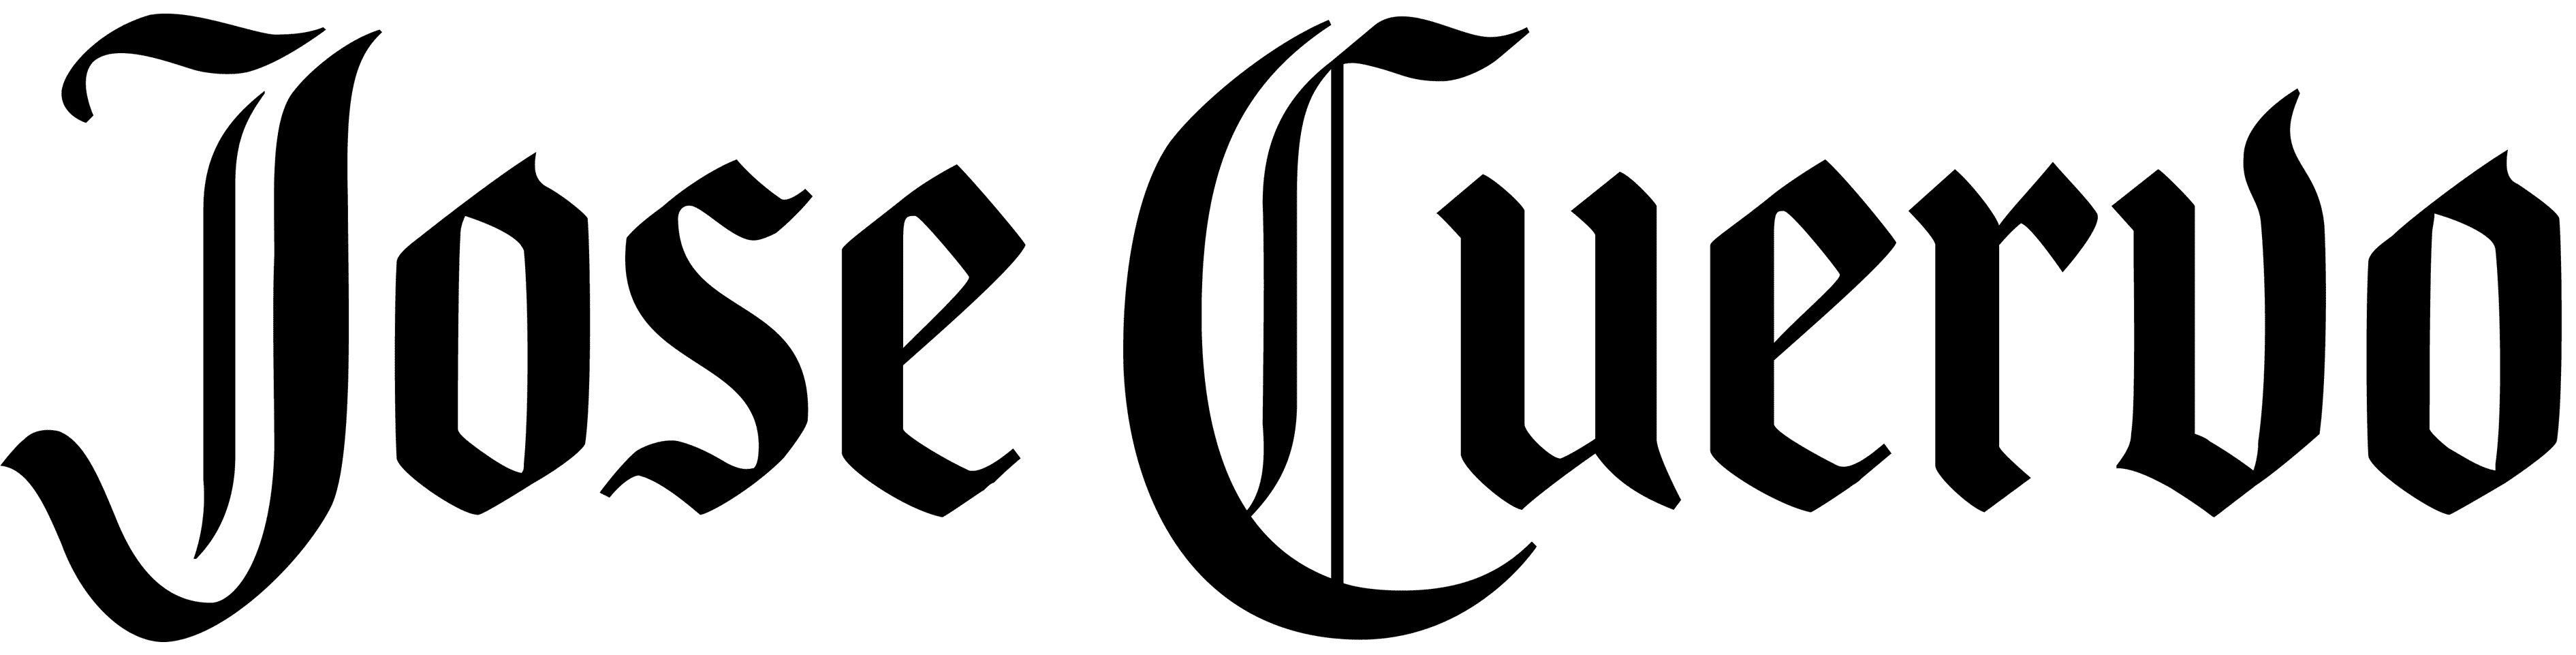 Jose-Cuervo-Logo